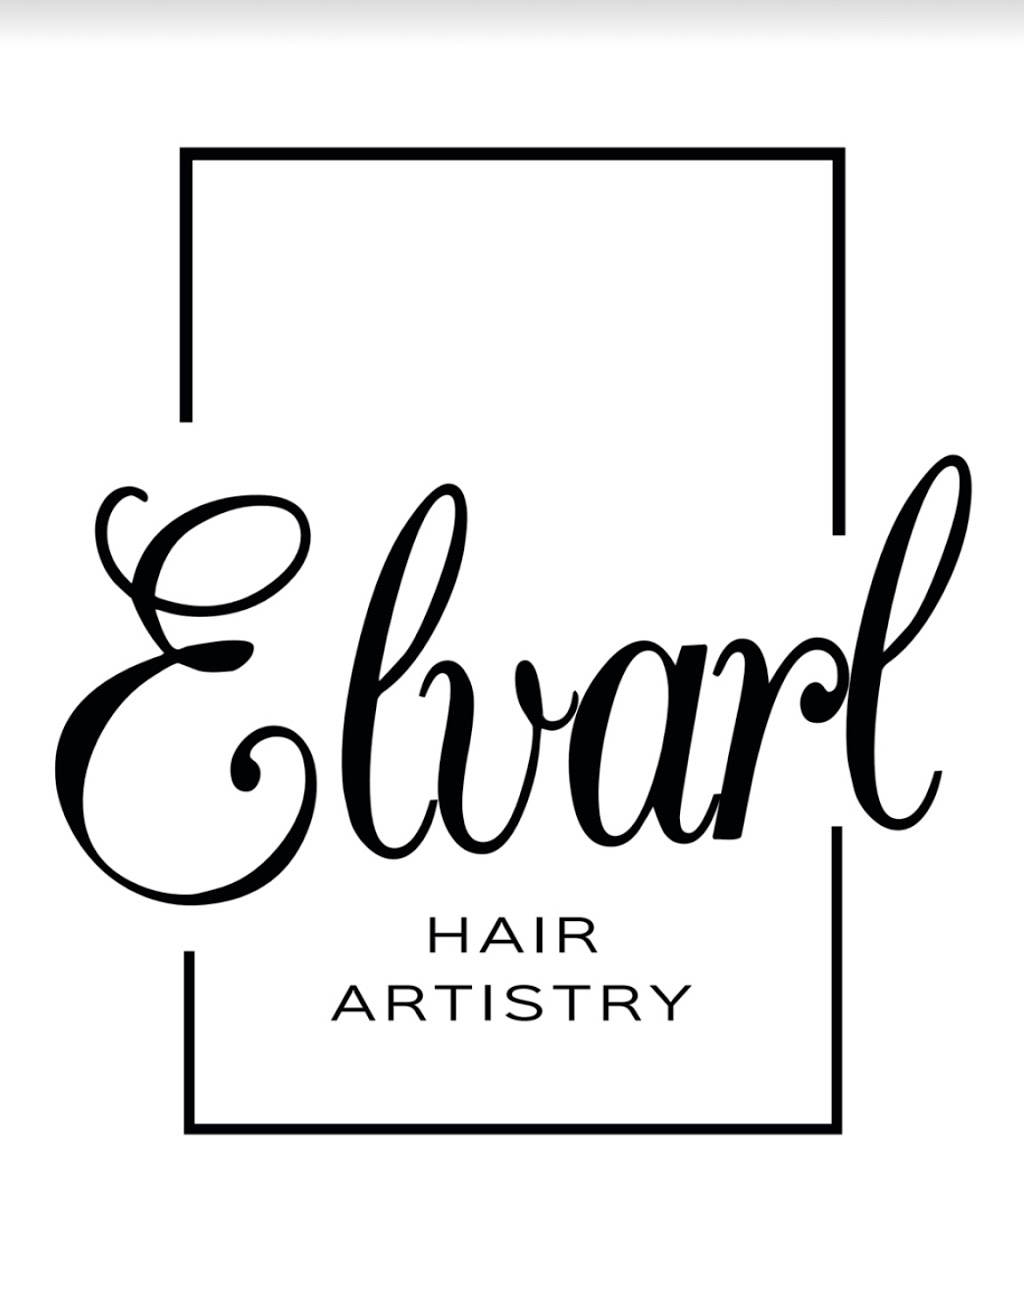 Elvarl Hair Artistry | 1/154 Chatswood Rd, Daisy Hill QLD 4127, Australia | Phone: (07) 3209 3141